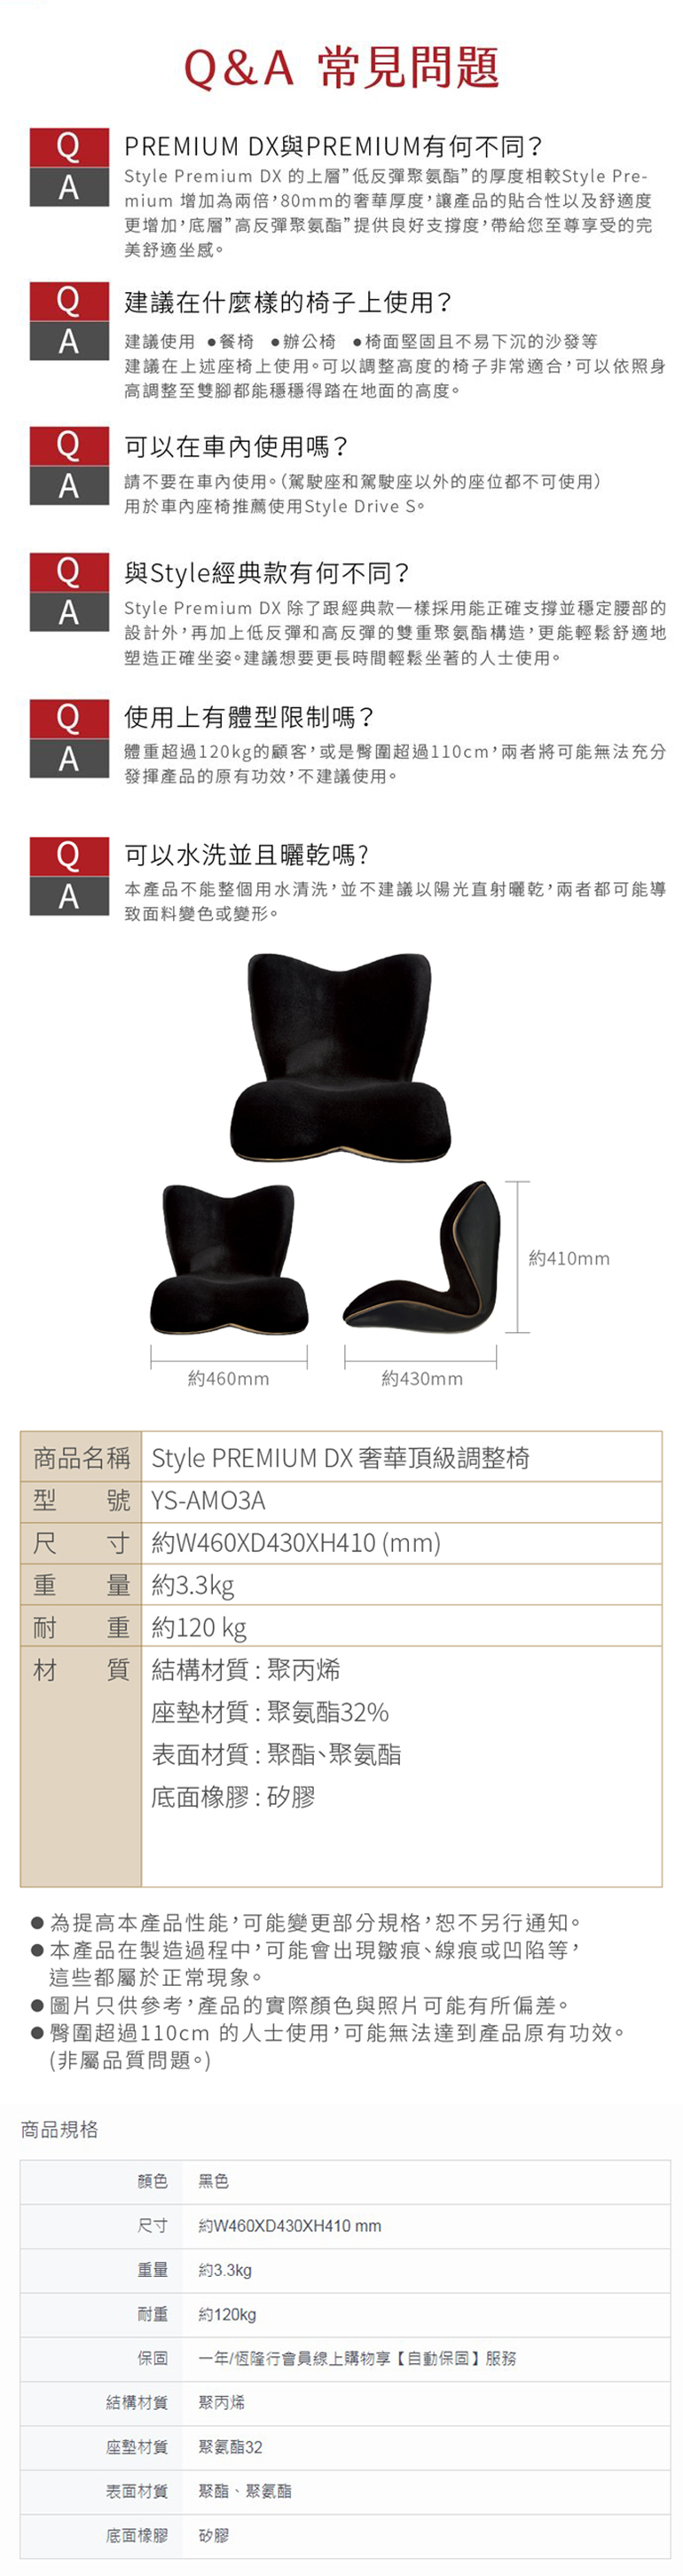 Style PREMIUM DX 調整椅奢華頂級